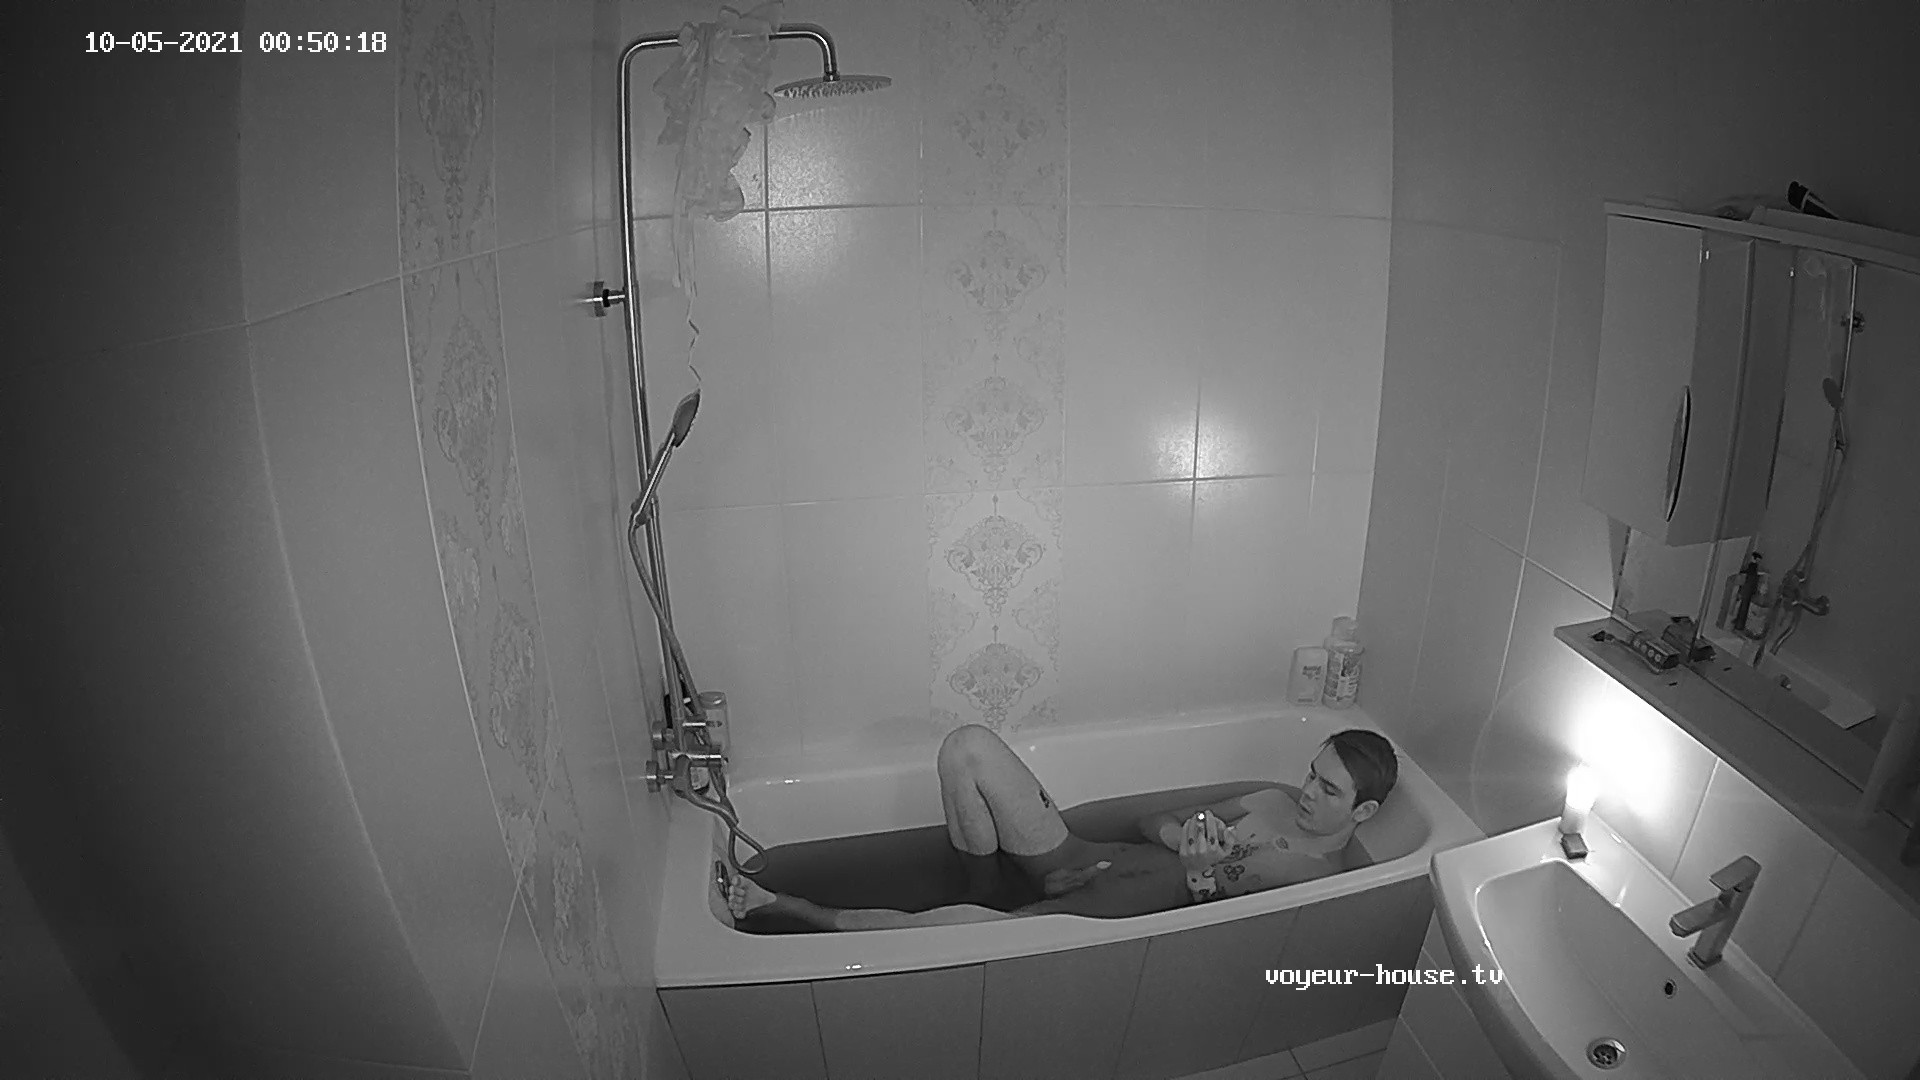 Artem bath in the dark 5 Oct 2021